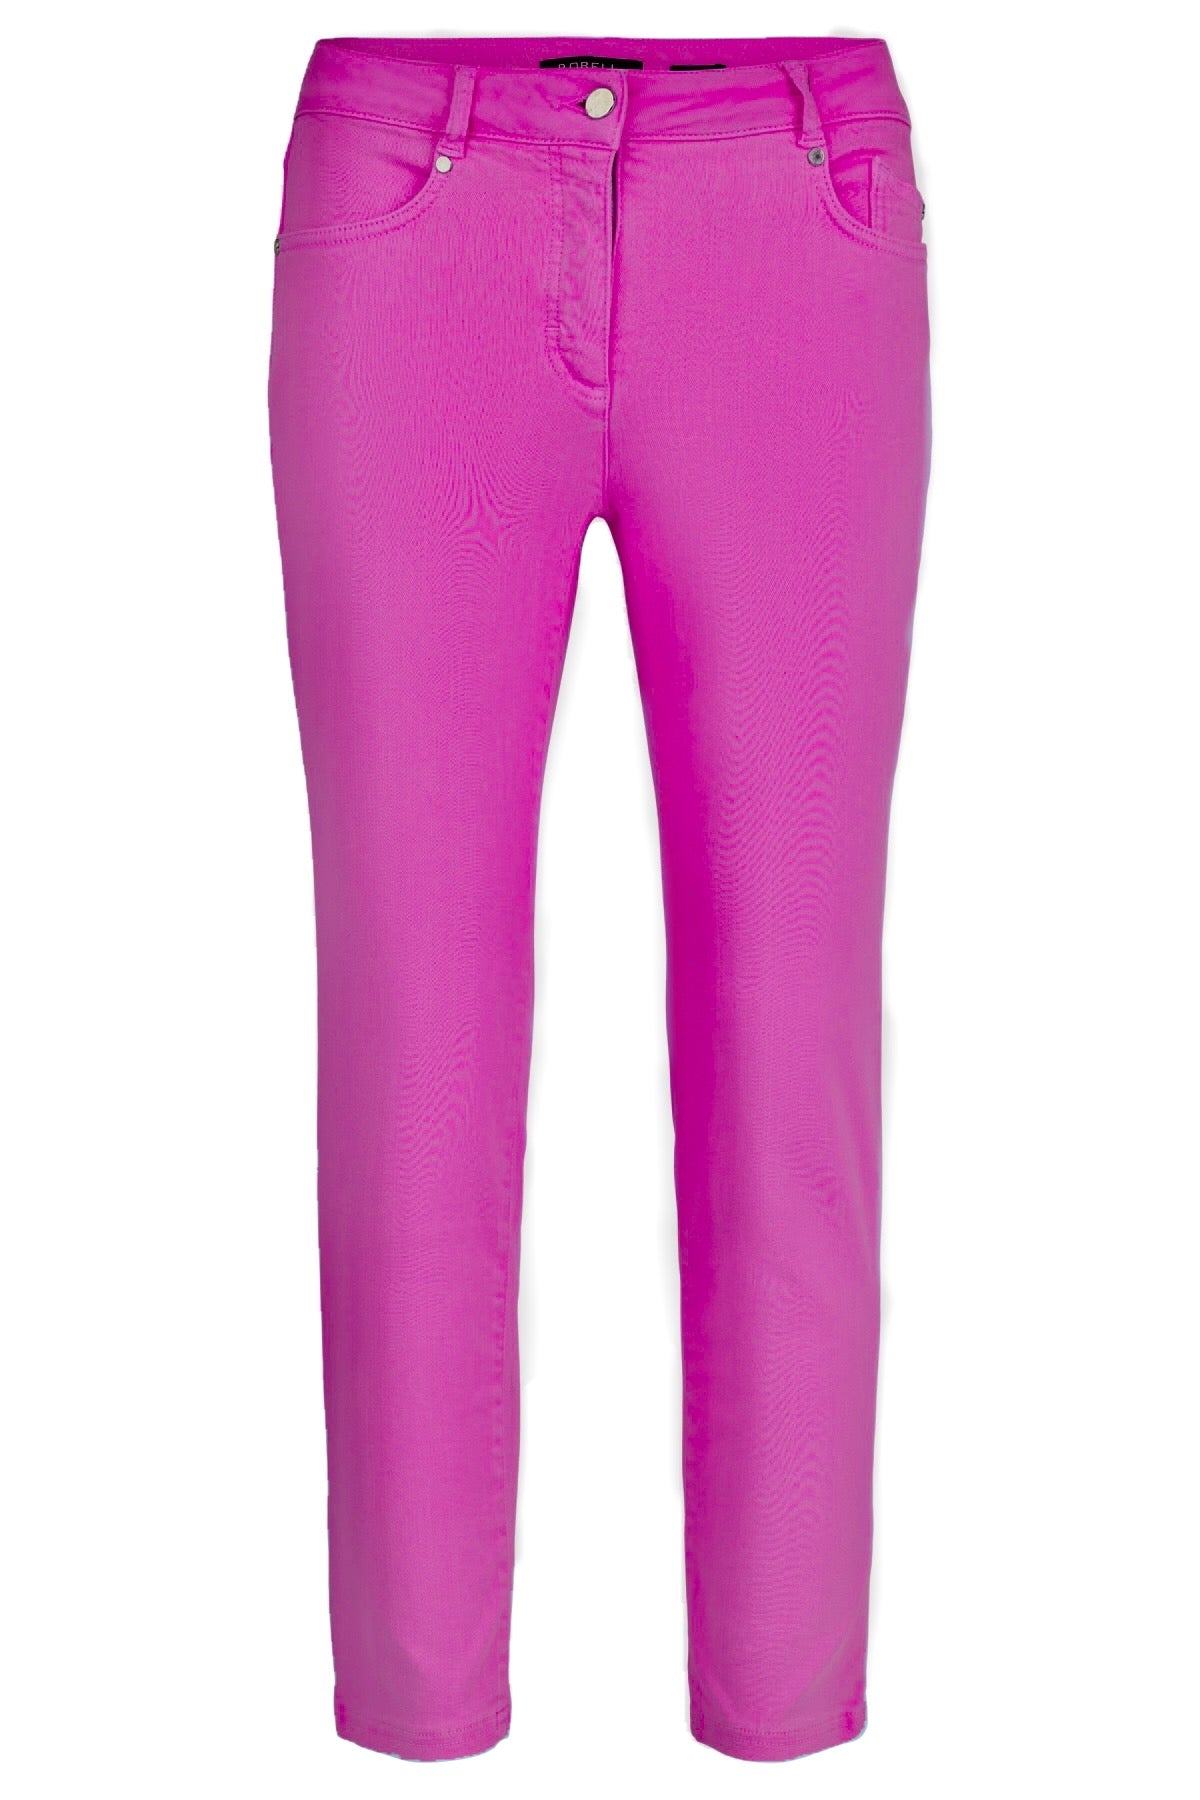 Eleana Hot Pink Jeans